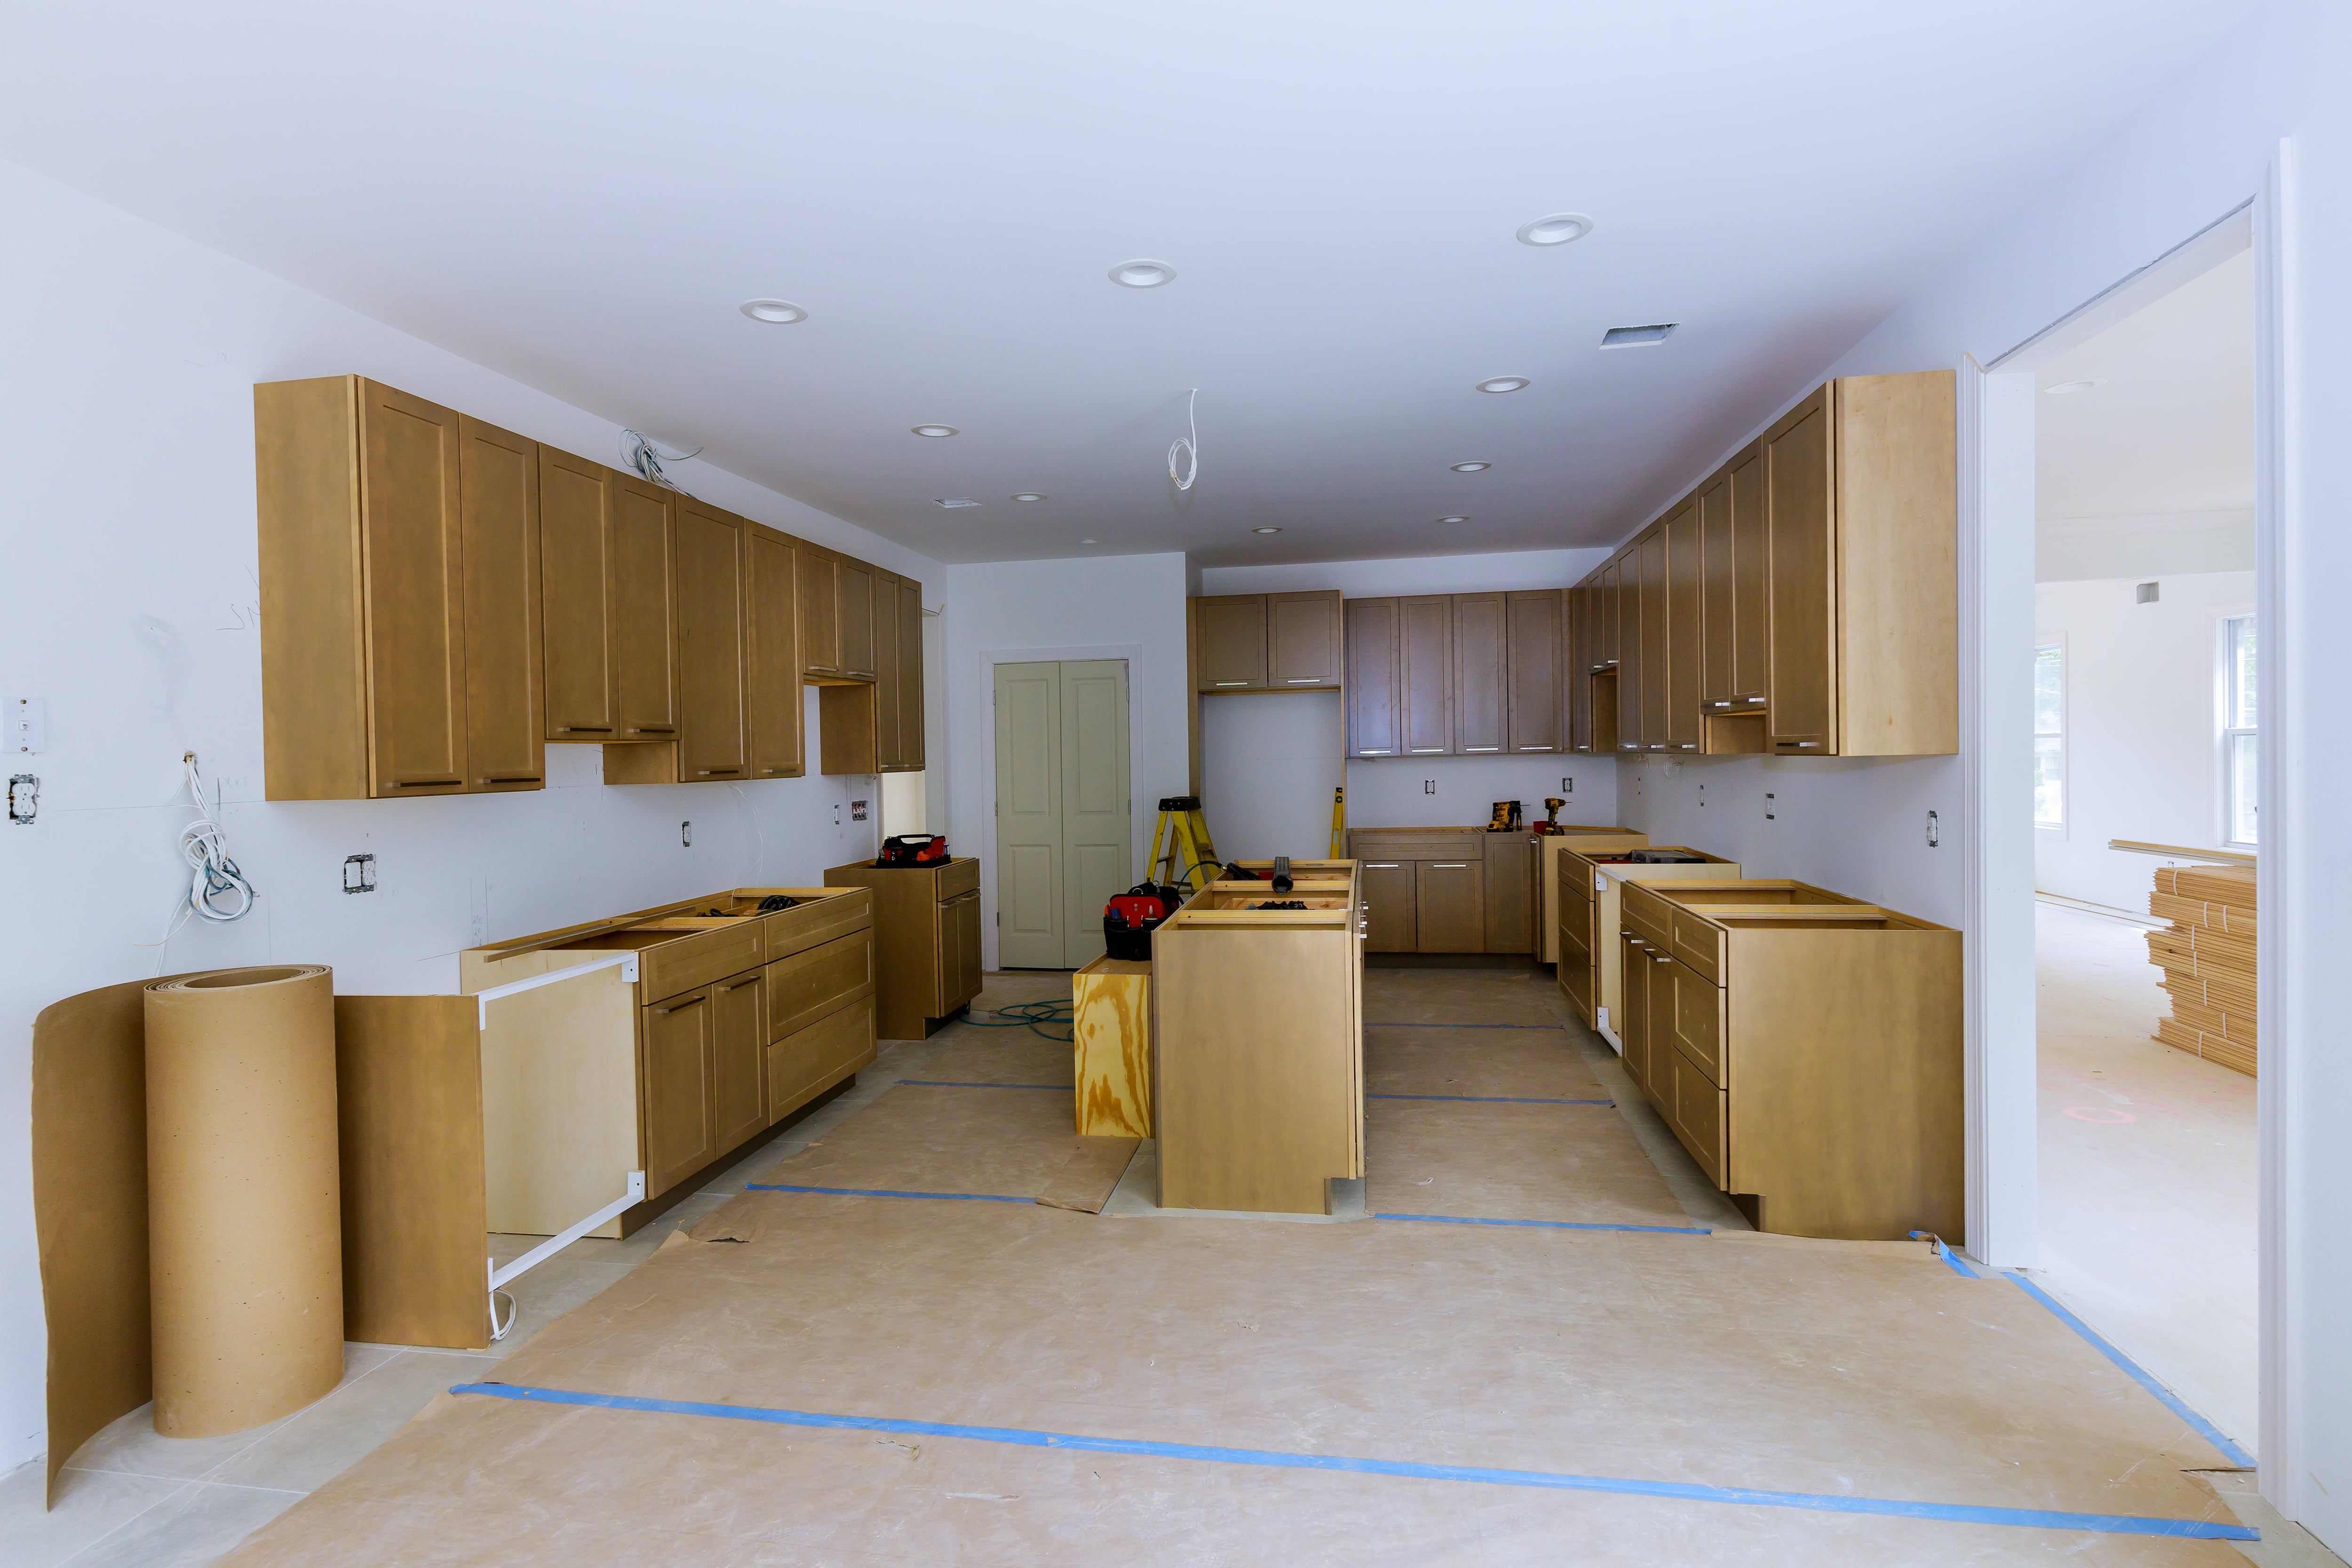 Kitchen Peninsula Removal Guide for Bradenton Homes